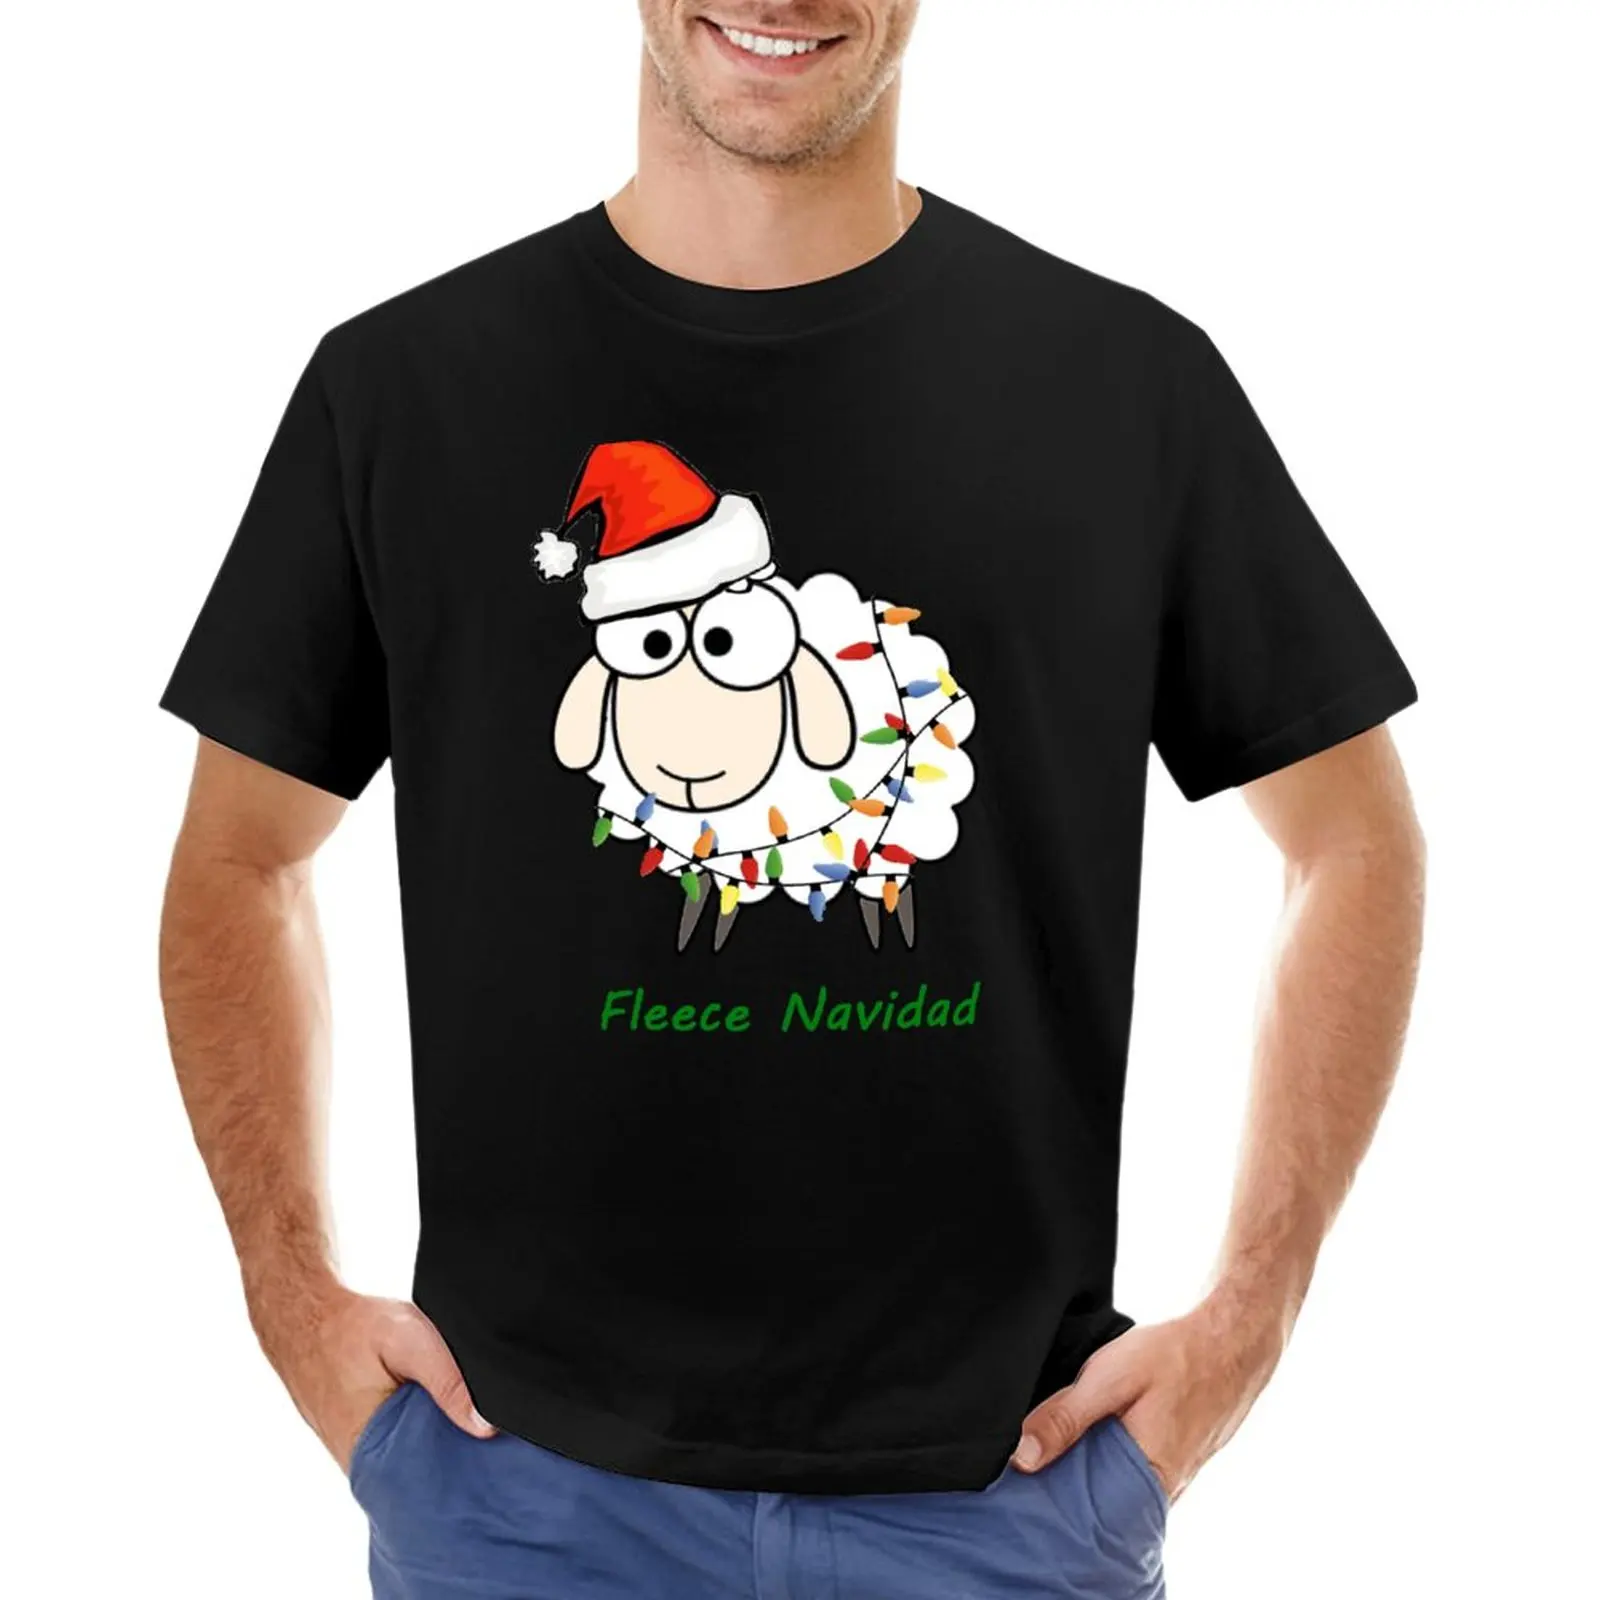 

Fleece Navidad - Christmas Sheep T-Shirt new edition Short sleeve tee animal prinfor boys customs mens champion t shirts